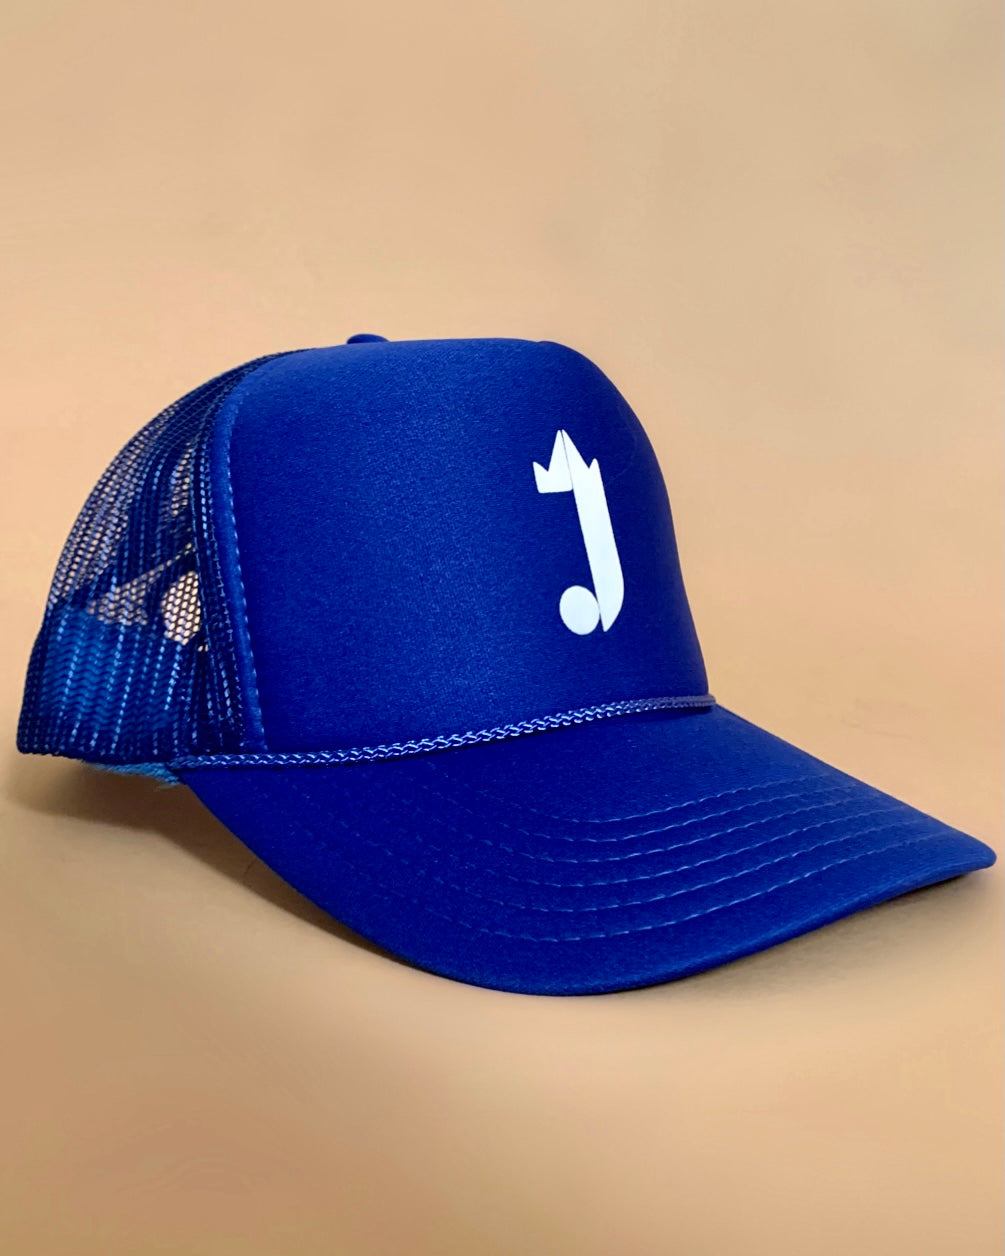 J King Trucker Hat (Royal Blue)